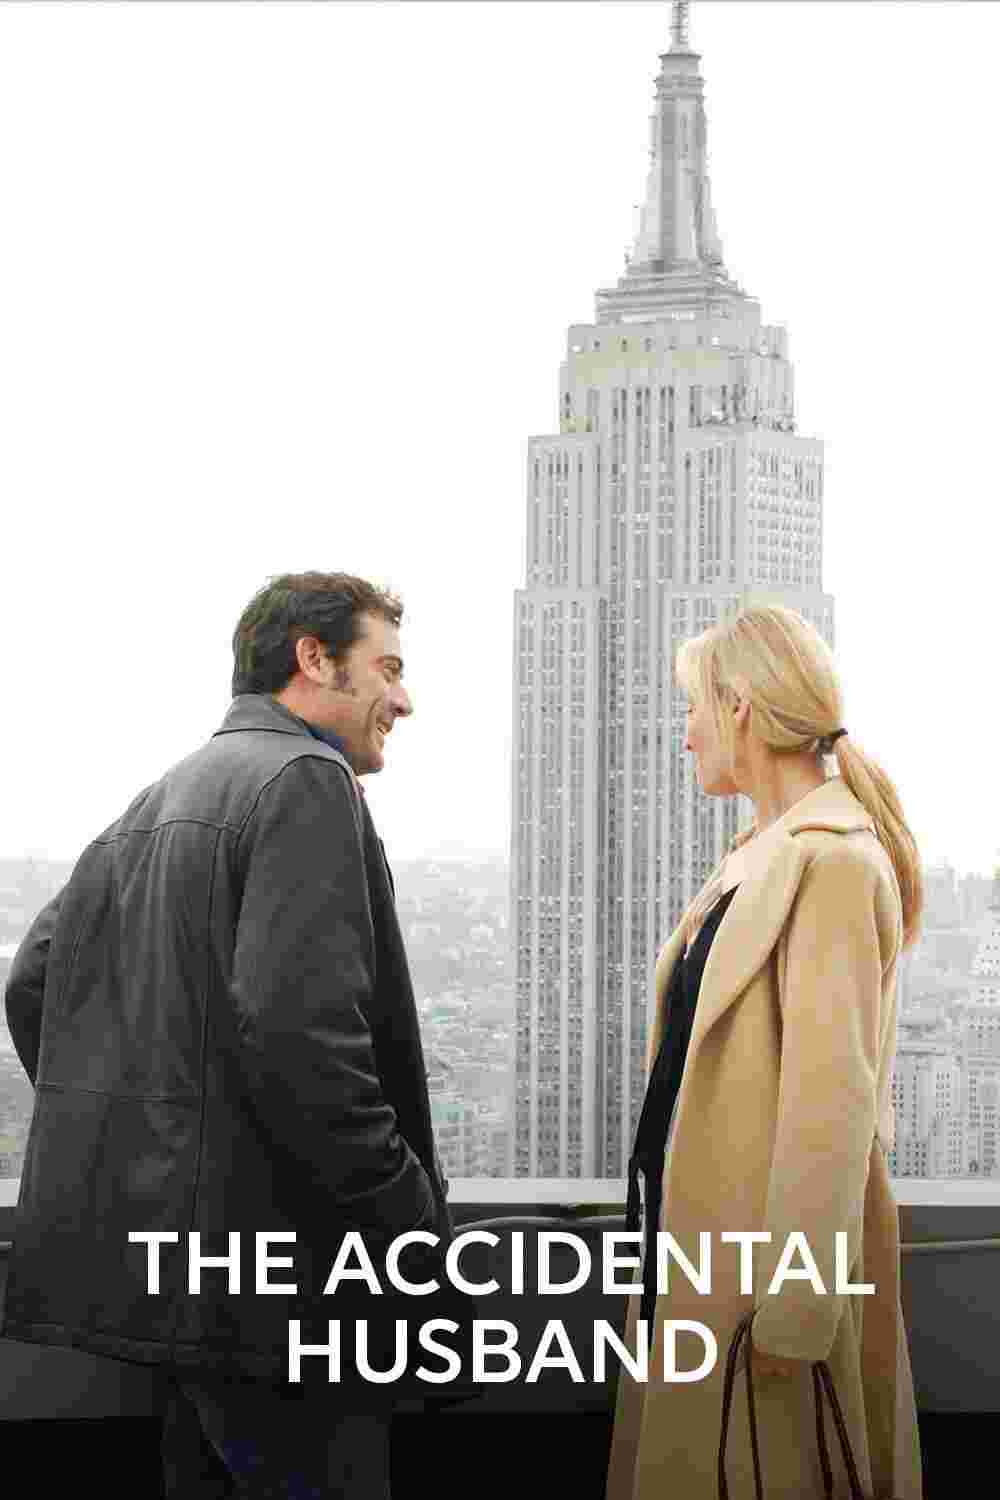 The Accidental Husband (2008) Uma Thurman